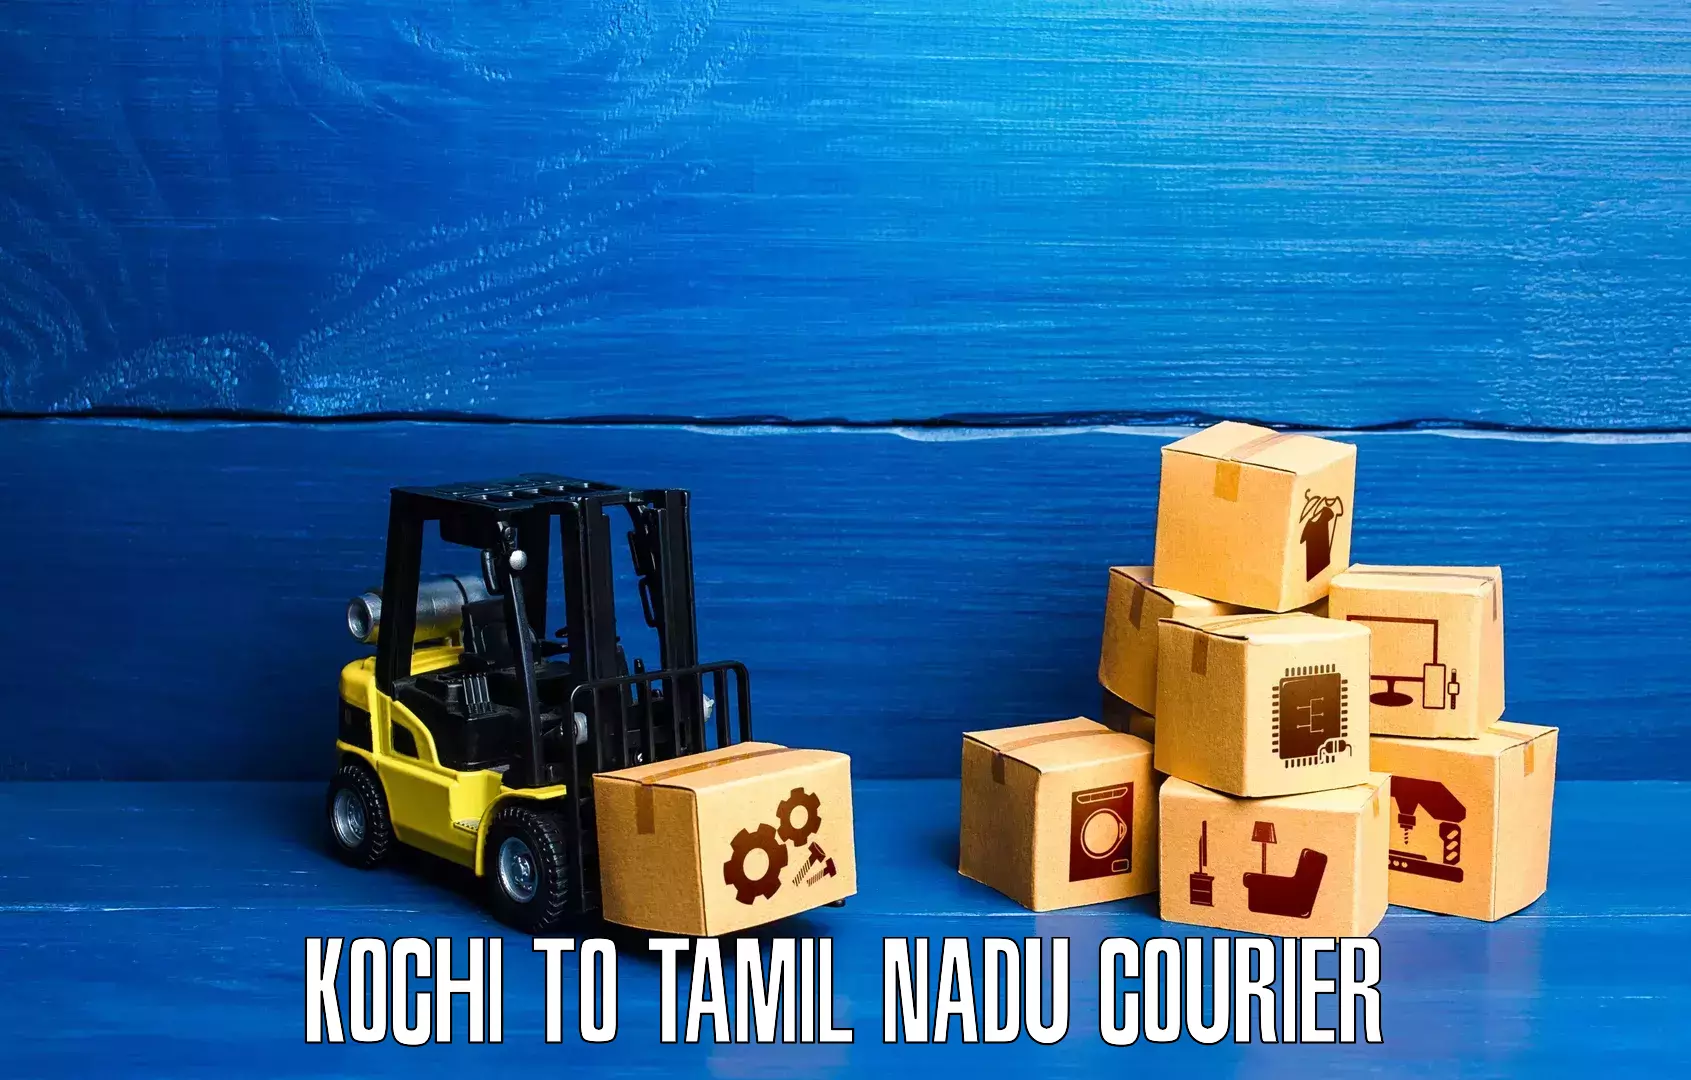 Express delivery capabilities Kochi to Chennai Port